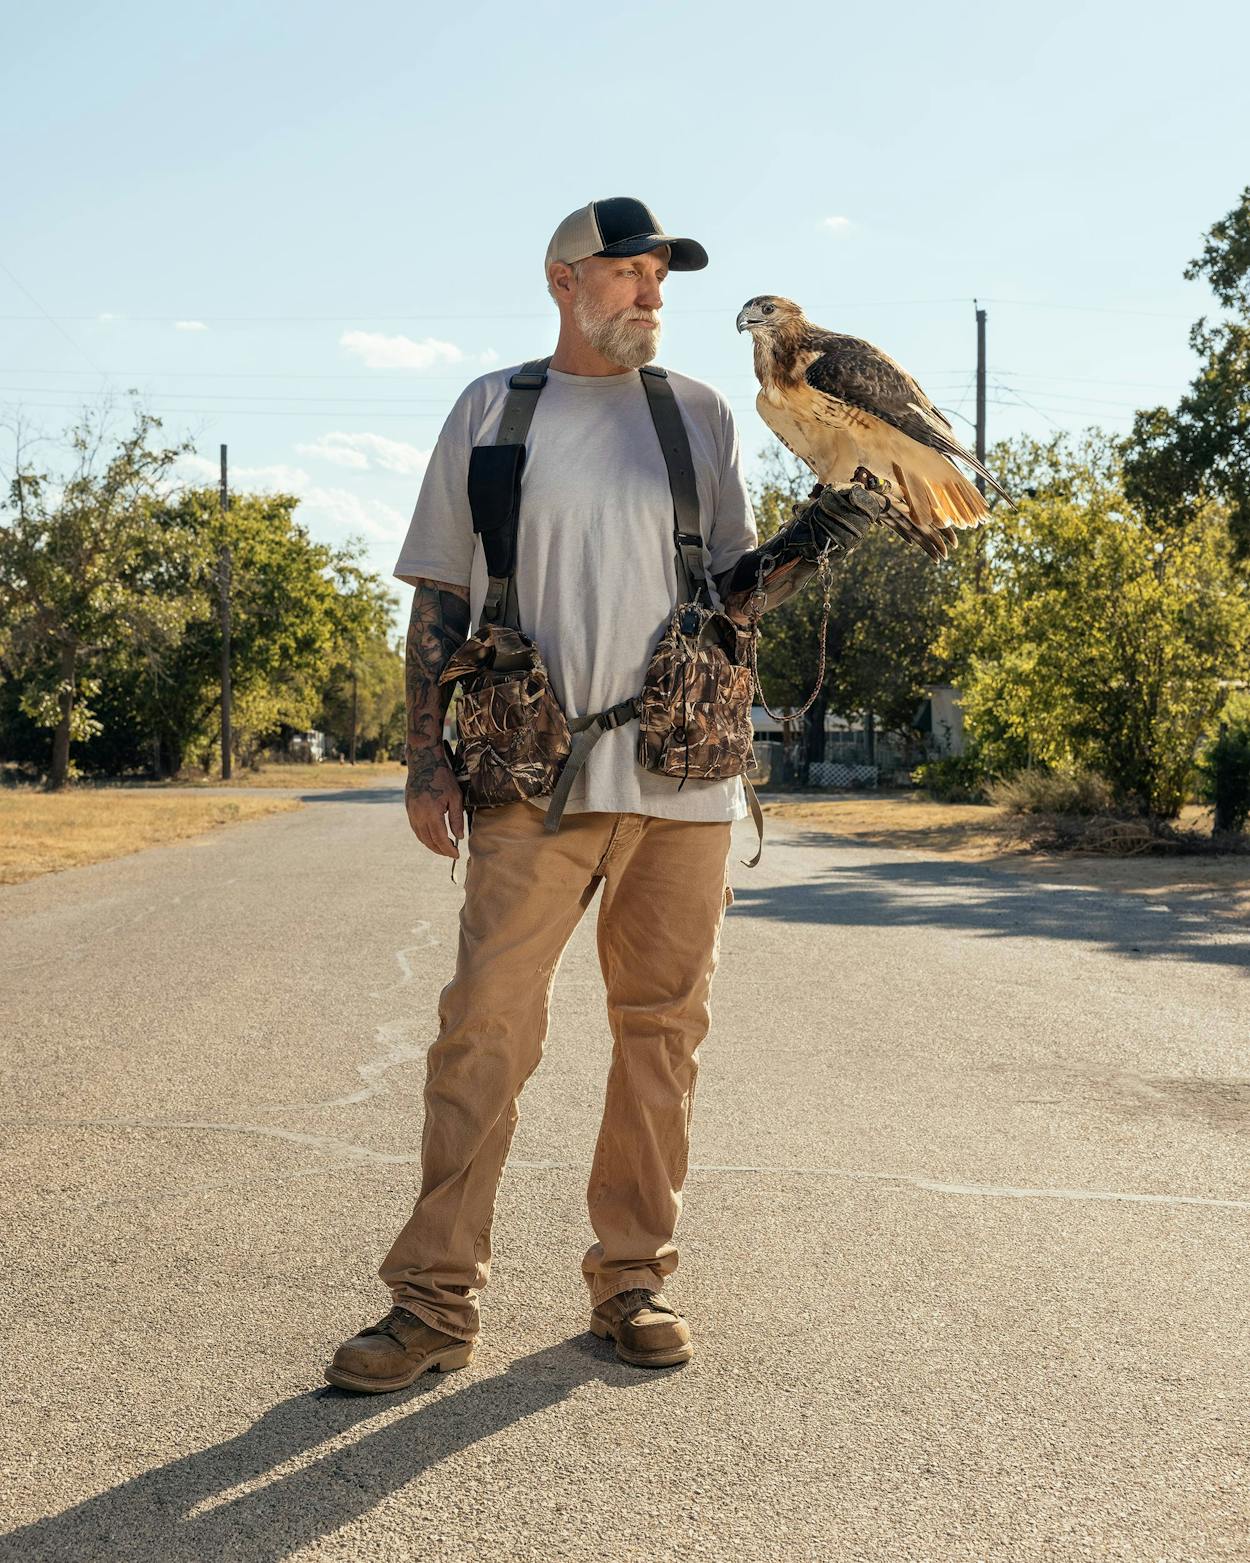 Charlie Alvis and his hawk, Calypso, in Brownwood on September 19, 2021.